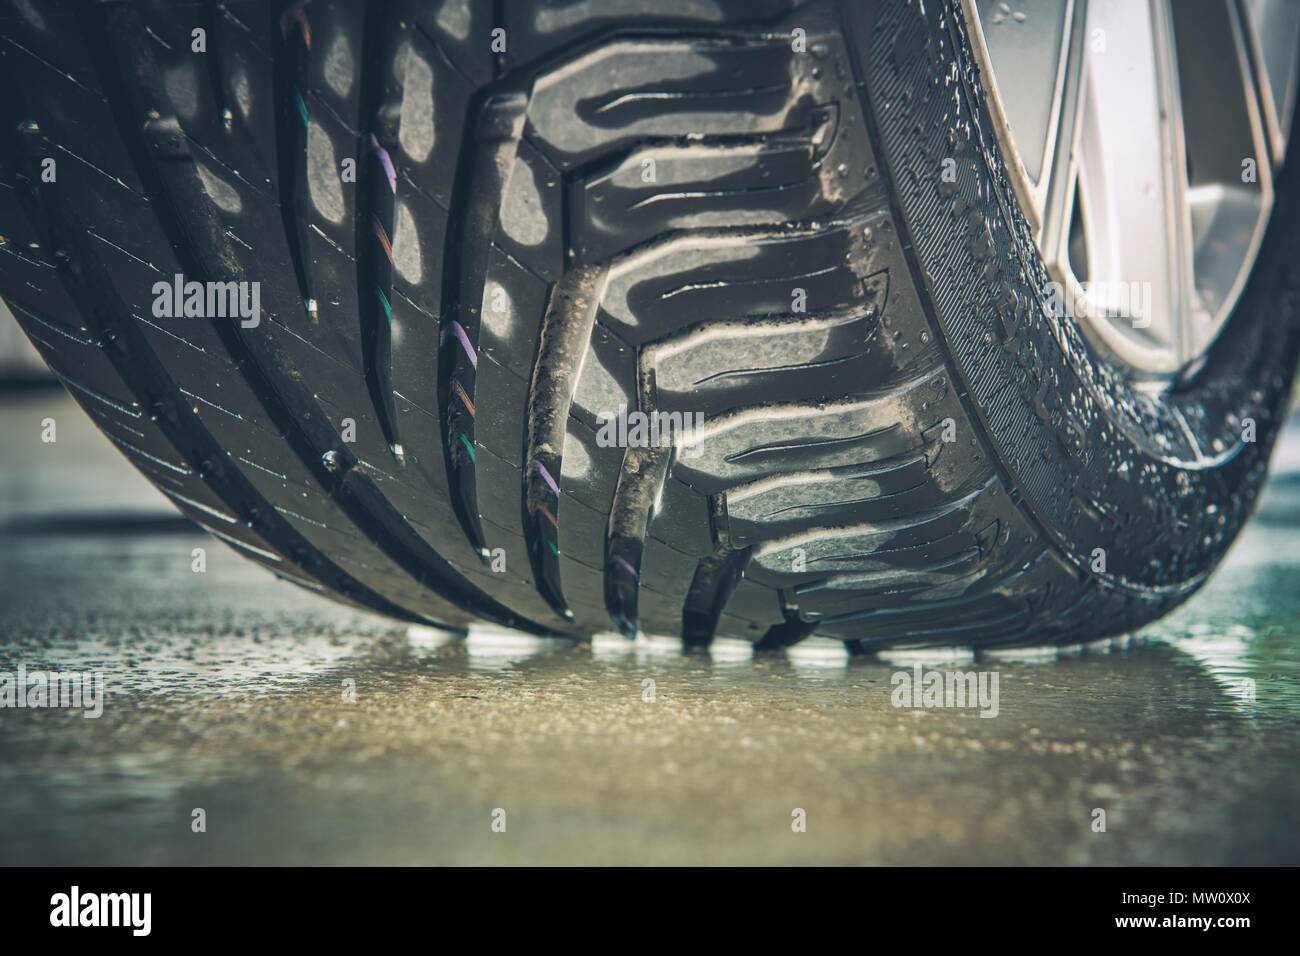 Brand New Vehicle Tire Tread Closeup Photo. Car Wheel on the Wet Pavement. Stock Photo